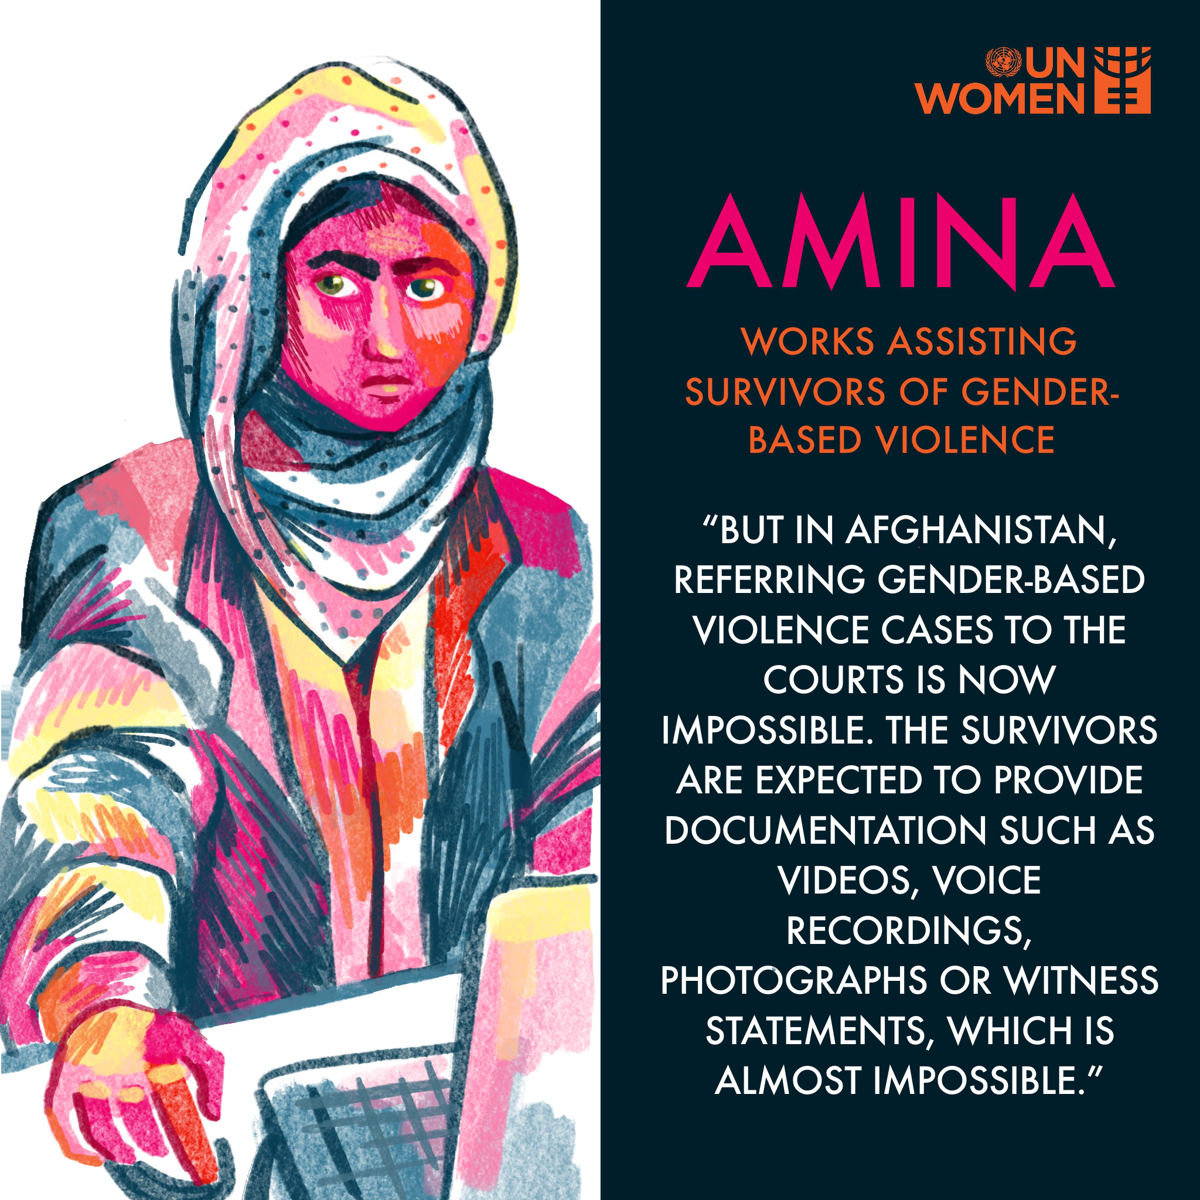 Amina  works for an Afghan-women-focused organization that seeks to assist survivors of gender-based violence.